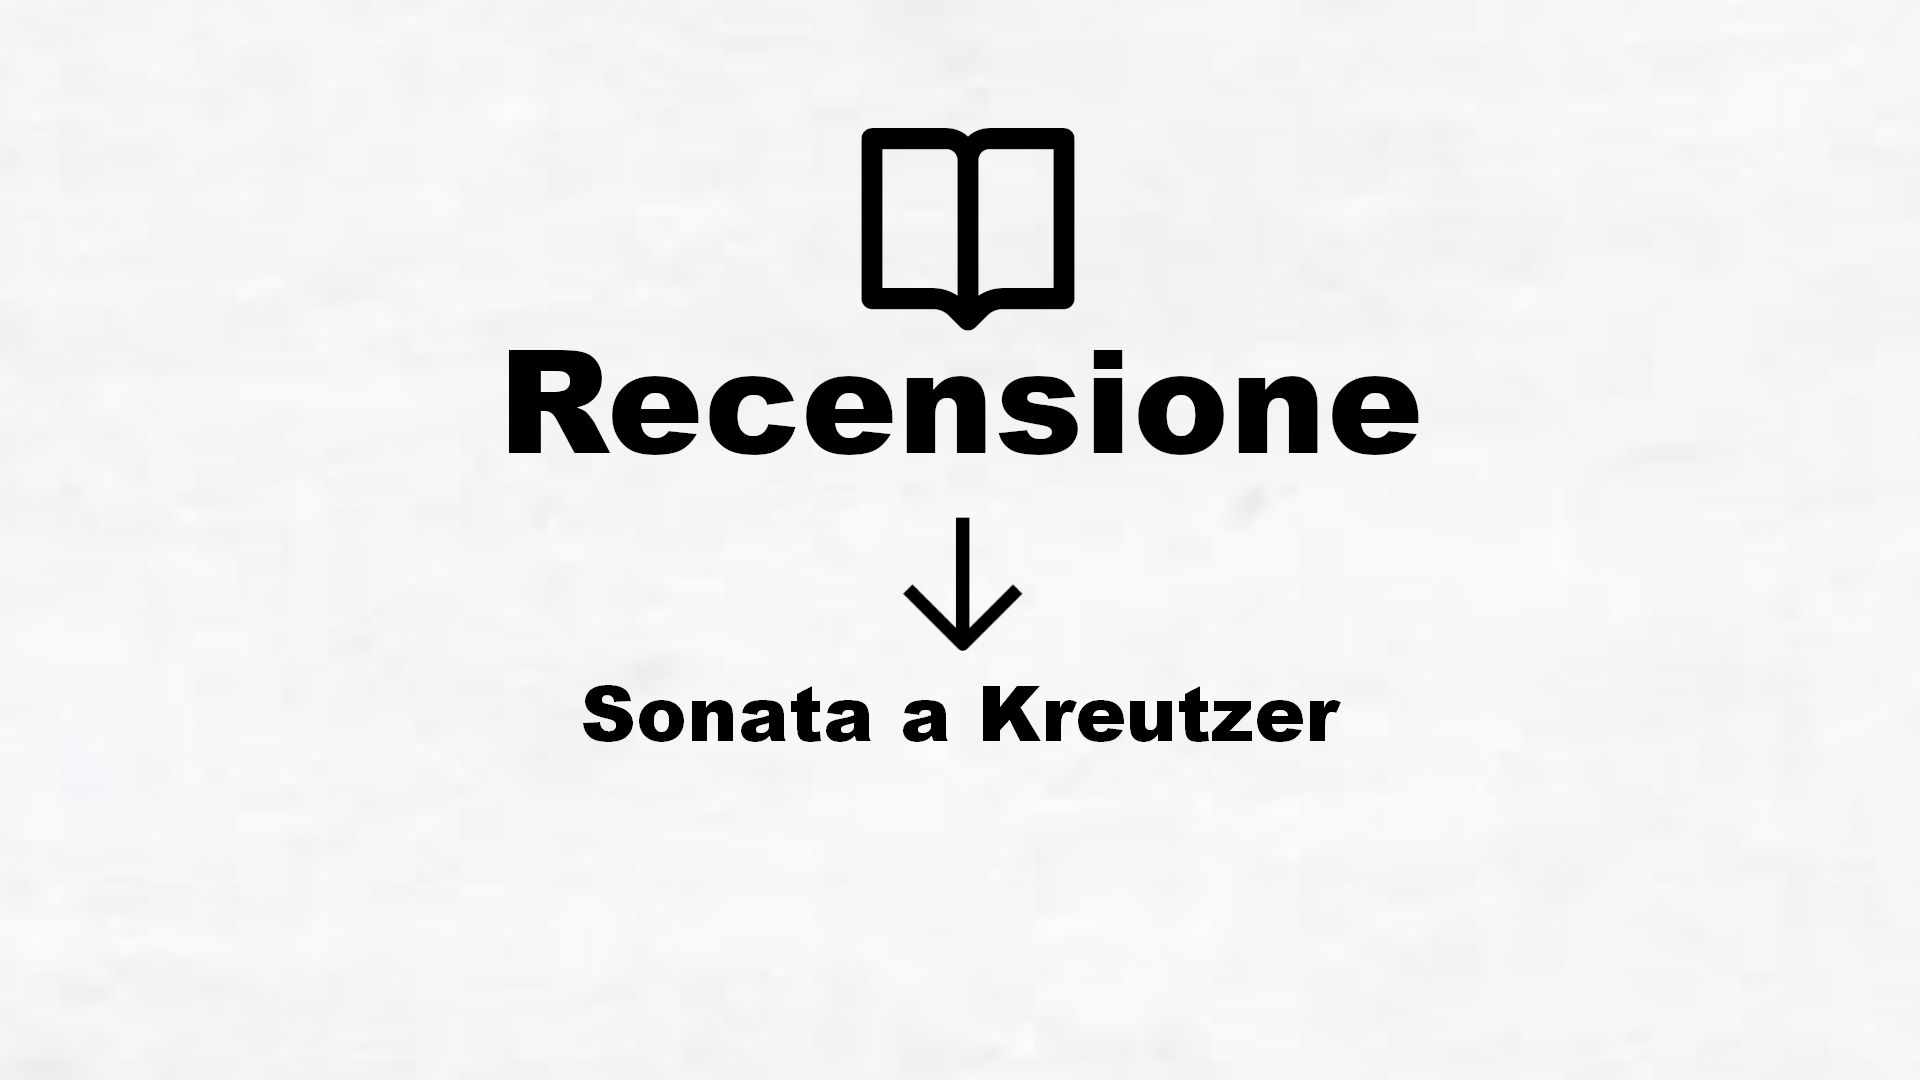 Sonata a Kreutzer – Recensione Libro